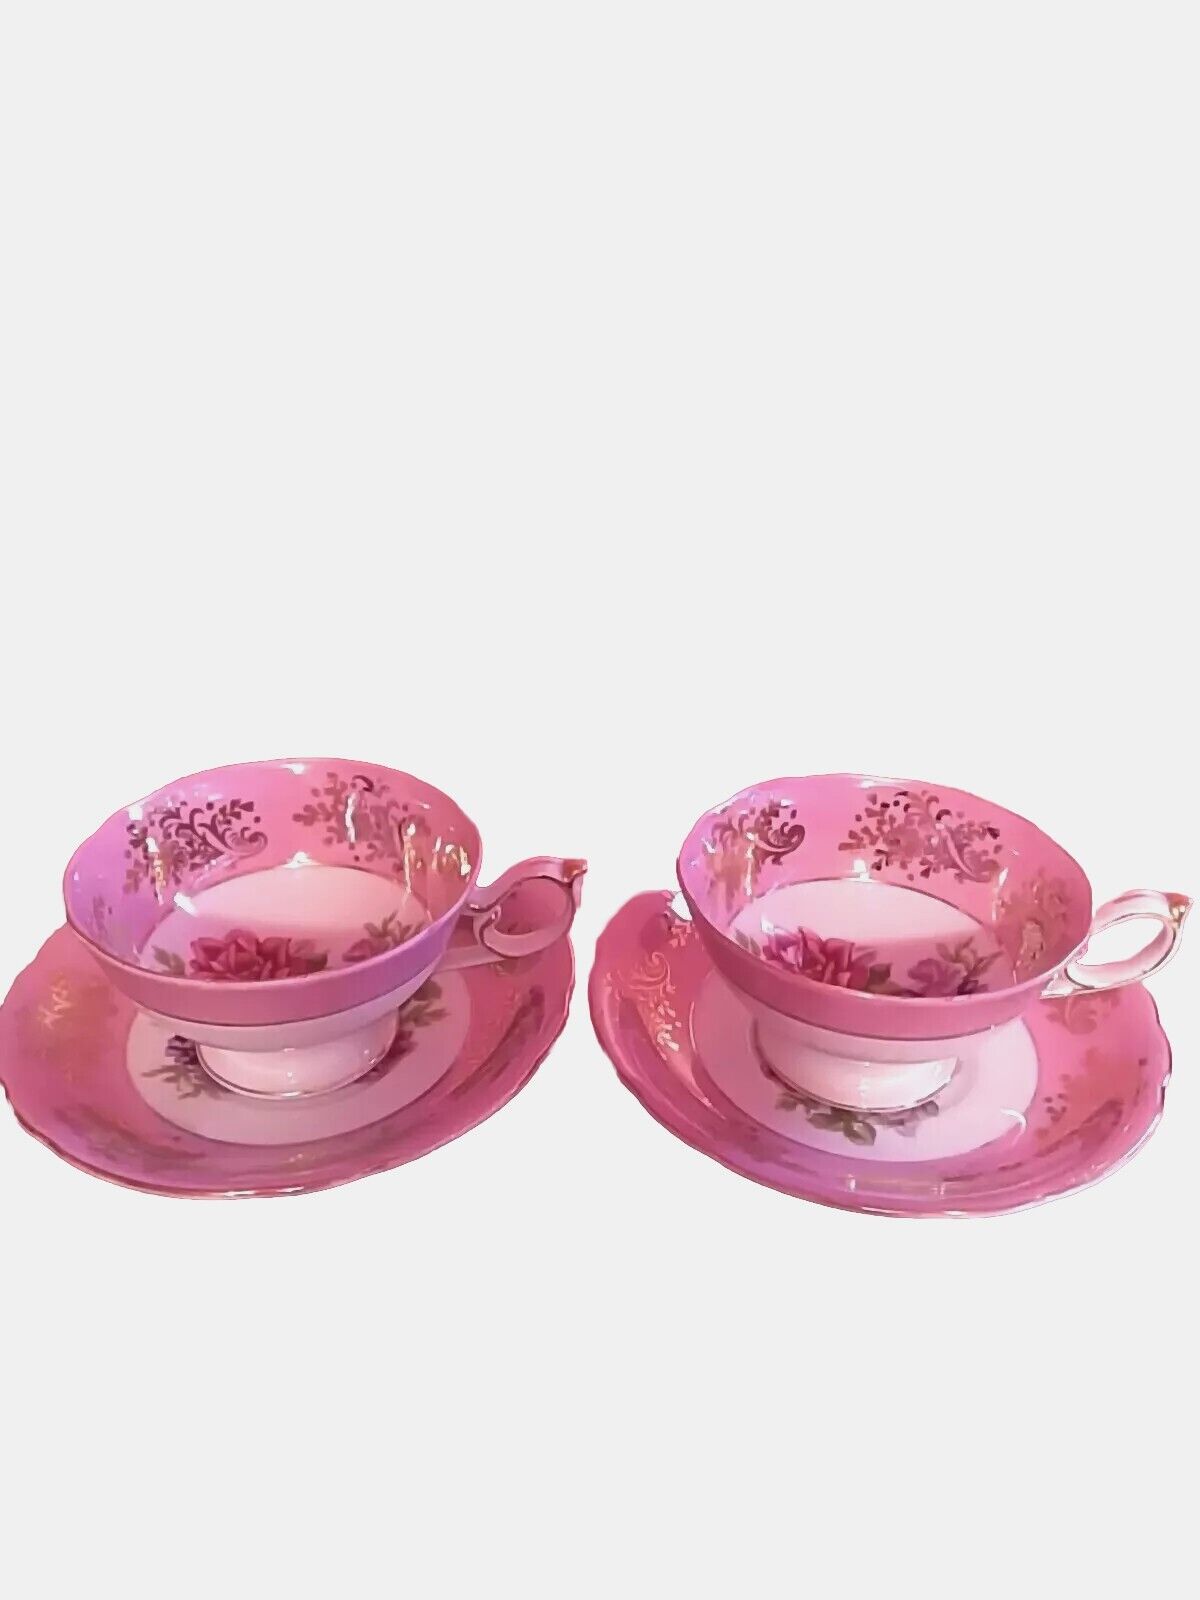 2 Vintage Royal Halsey Pink Iridescent Teacups And Saucers